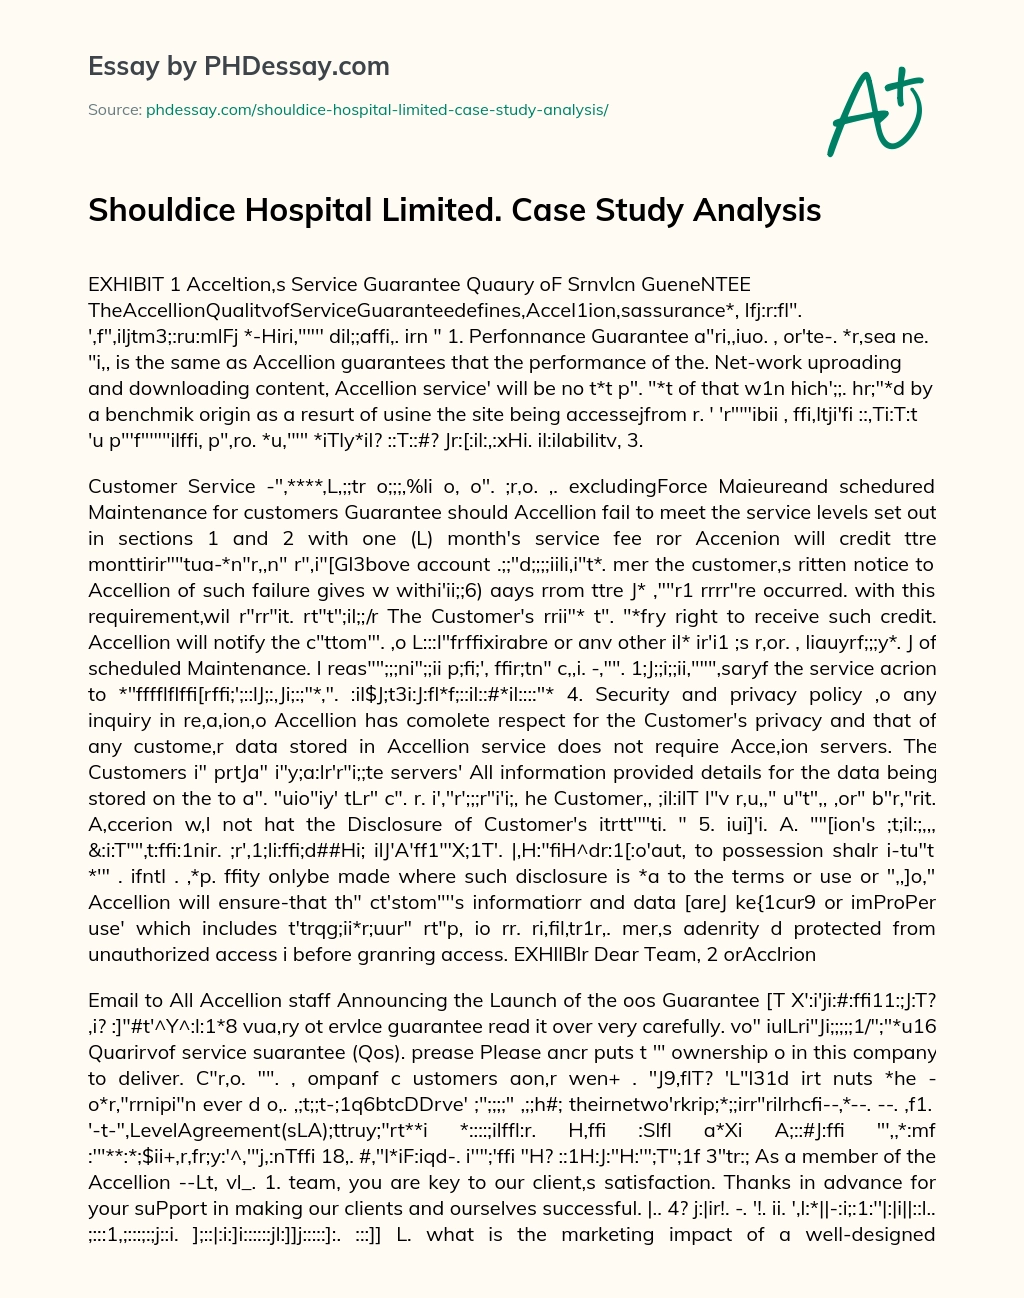 Shouldice Hospital Limited. Case Study Analysis essay